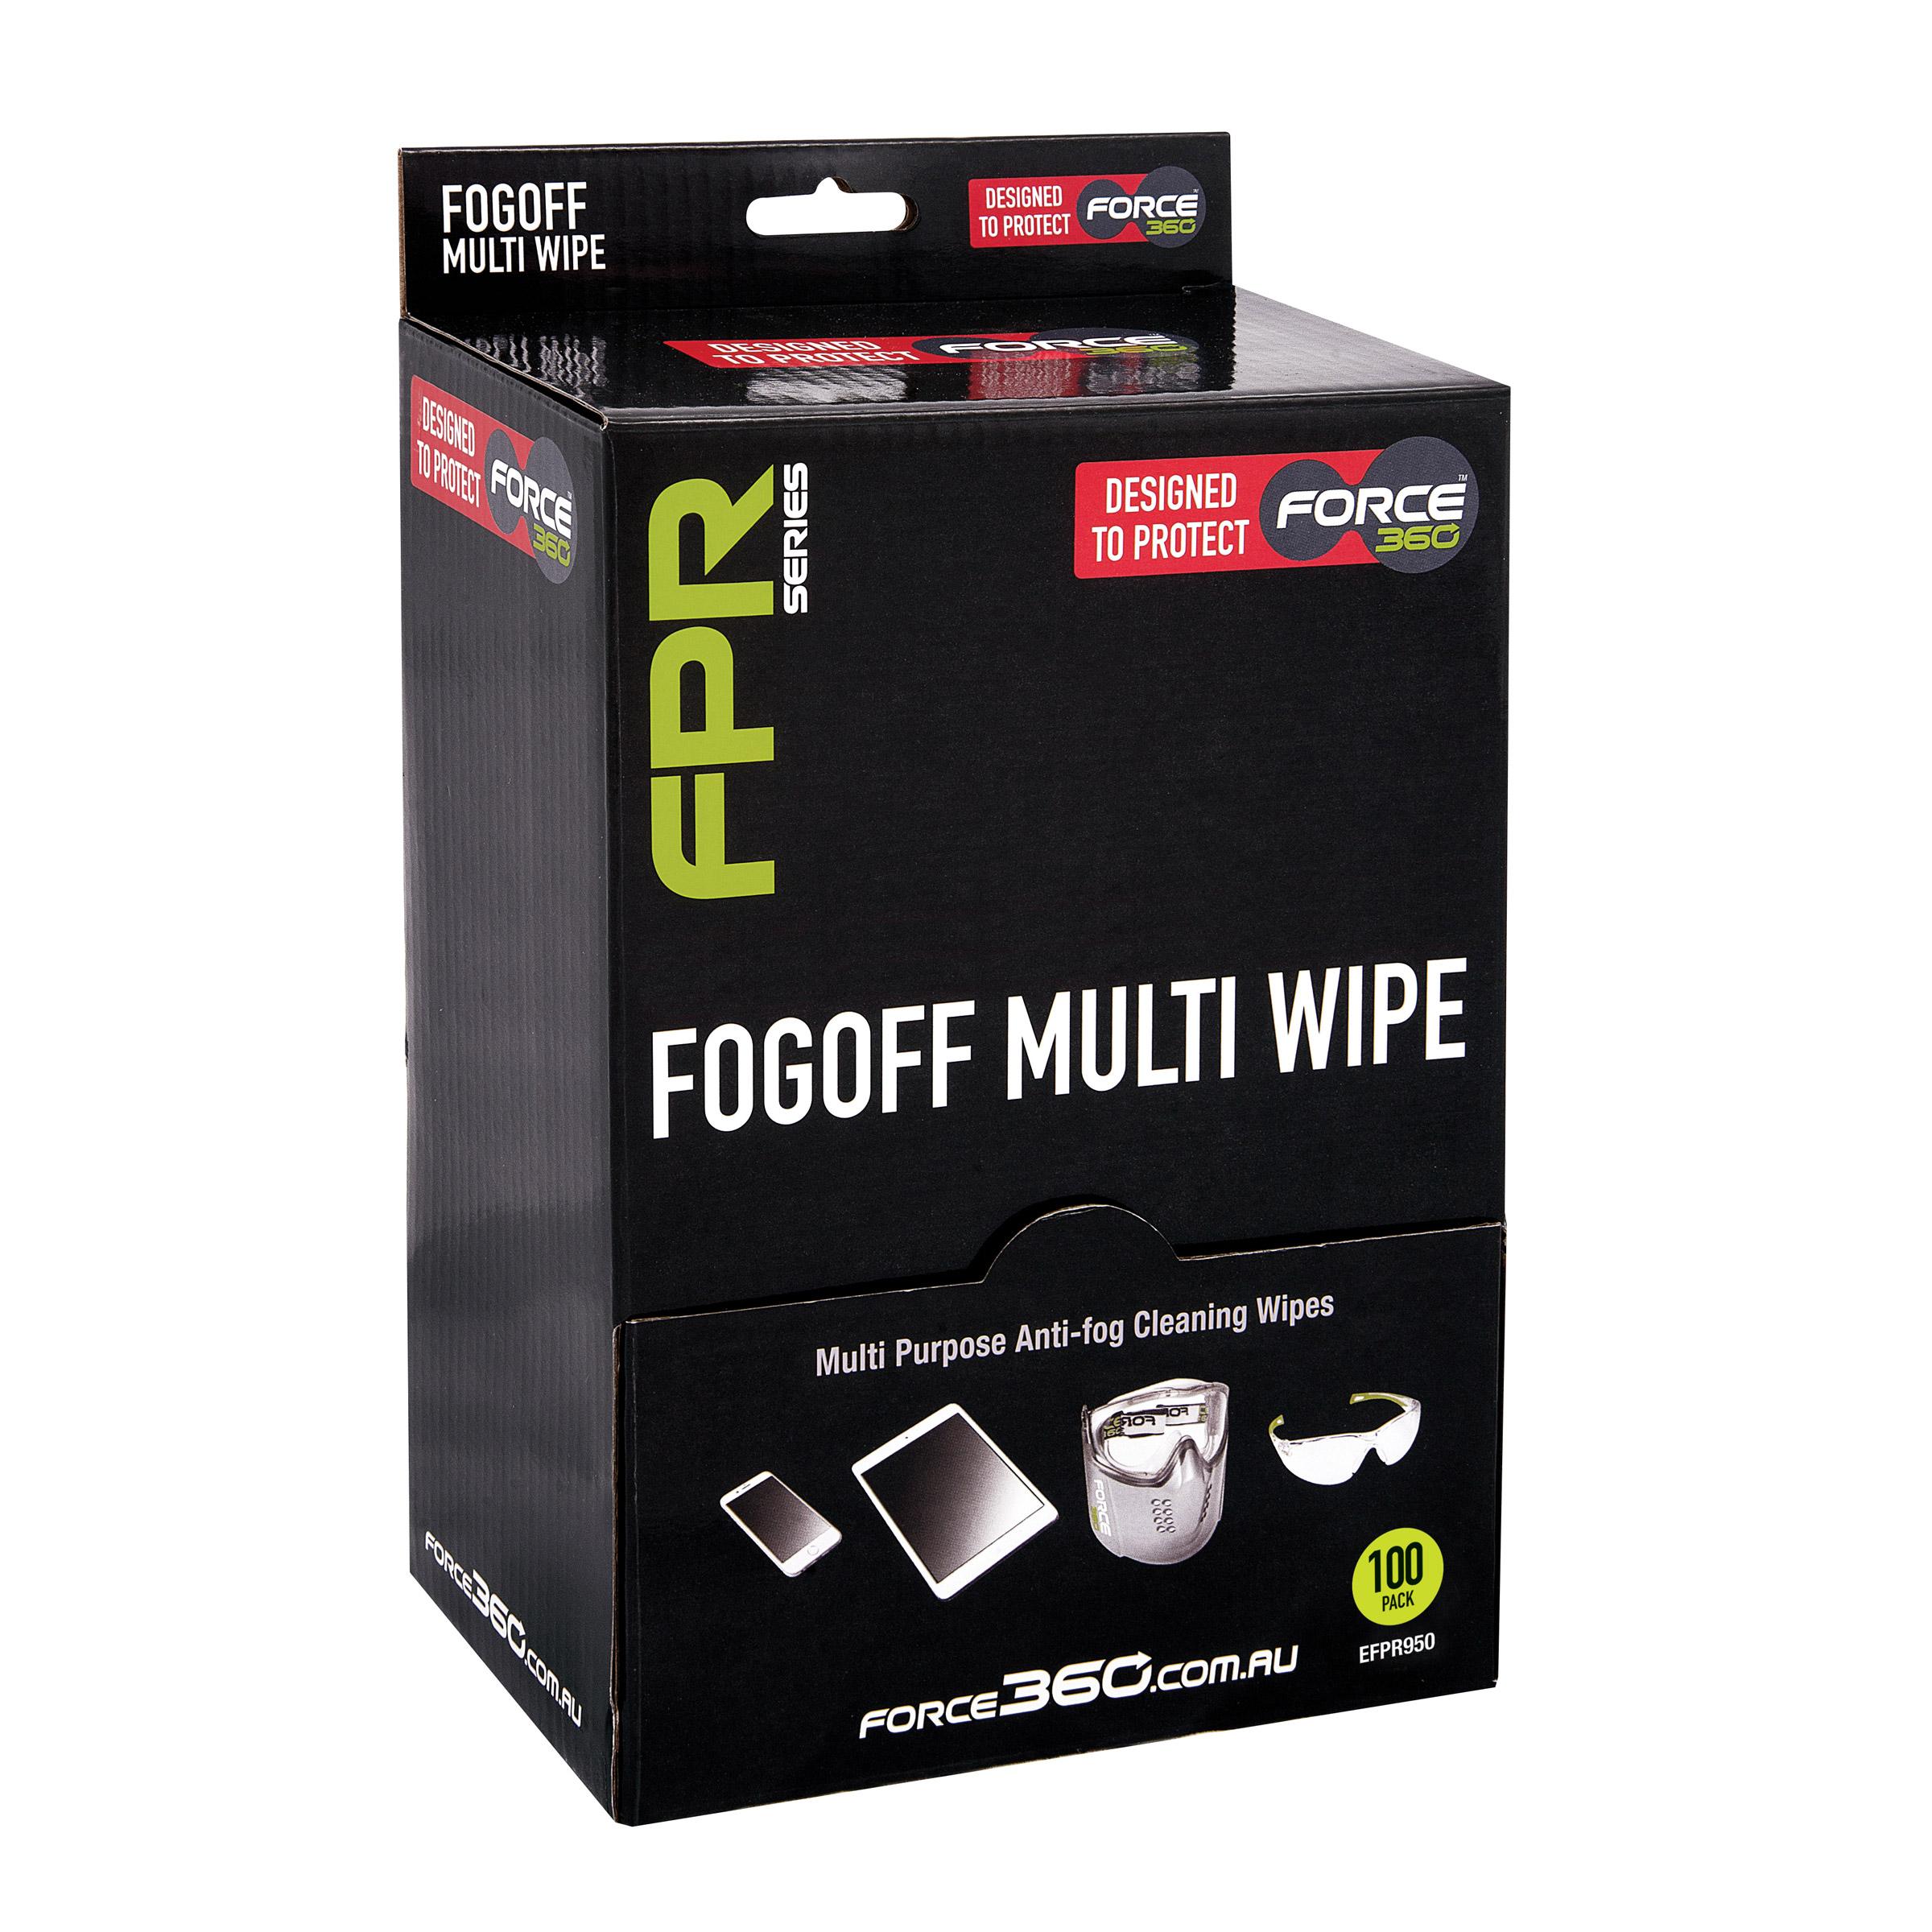 F360 Fog Off Multi Wipe